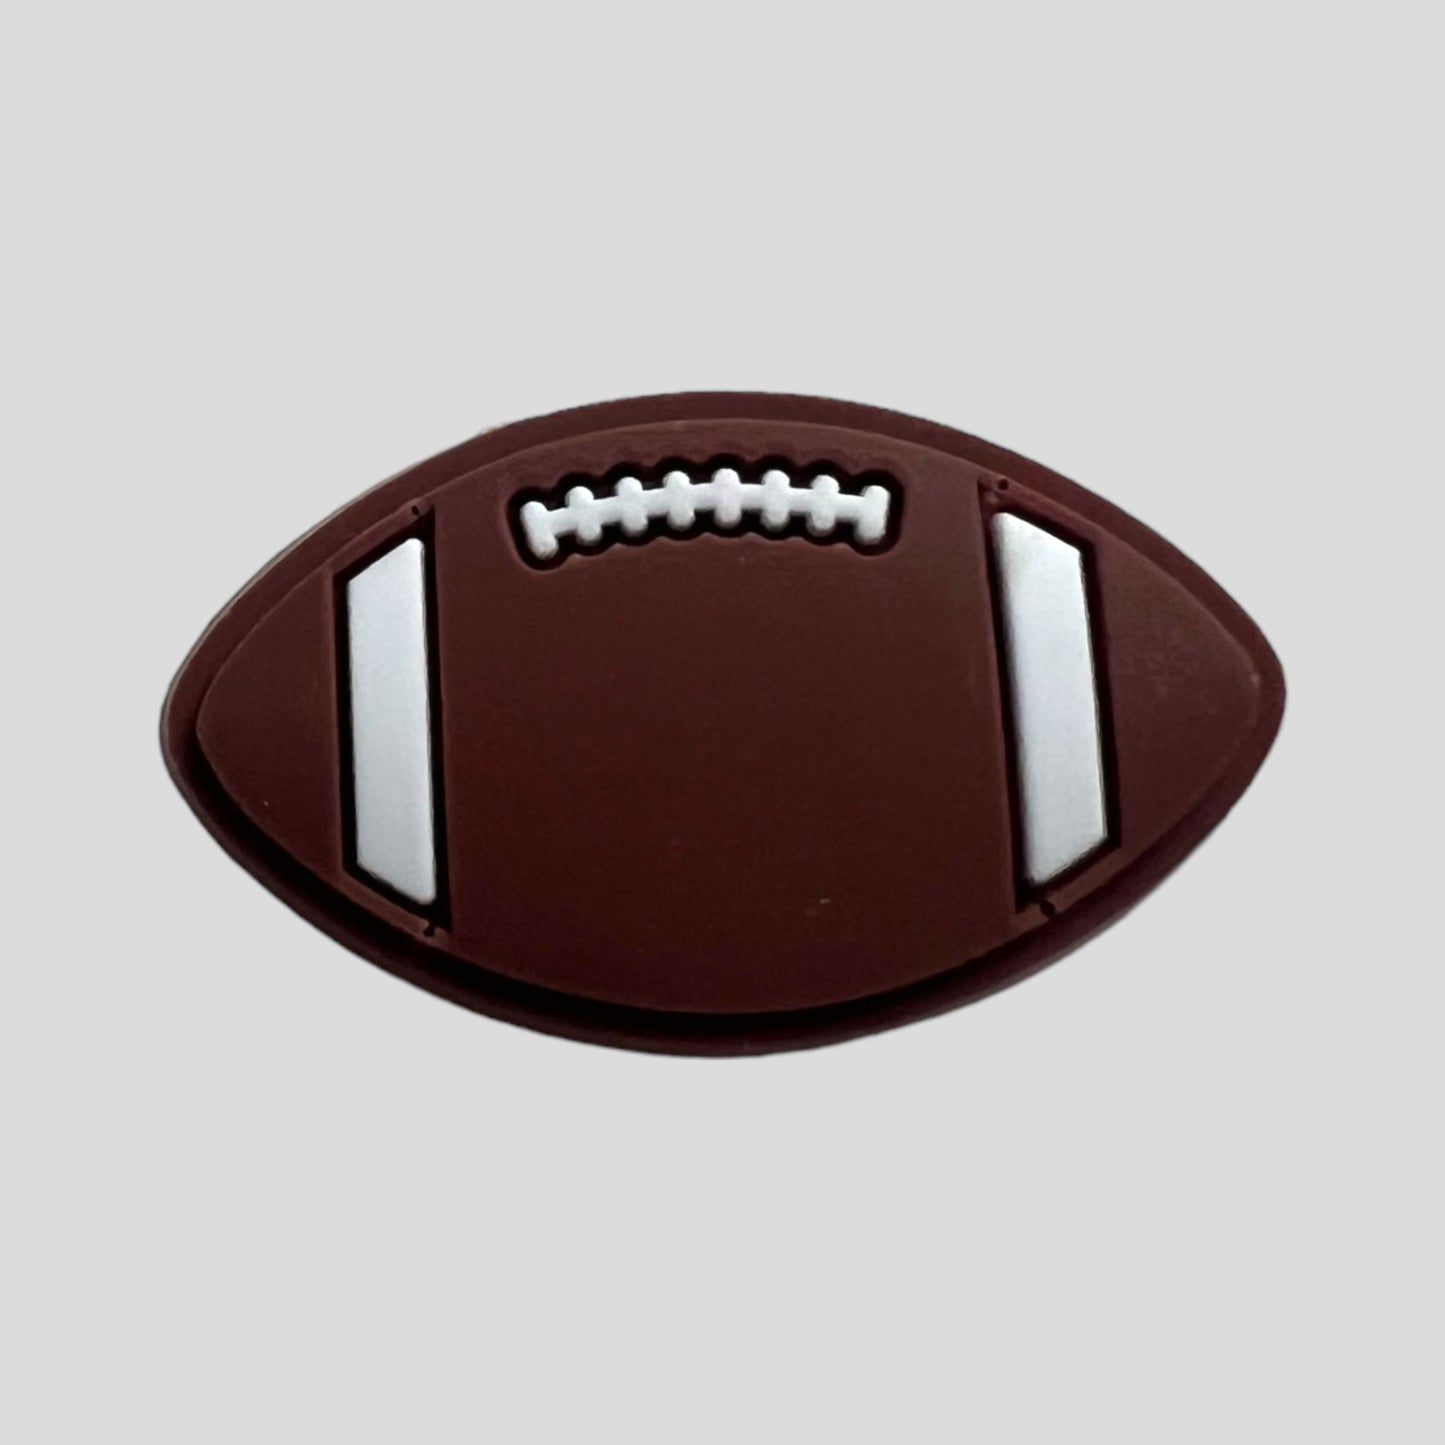 Gridiron Ball | NFL